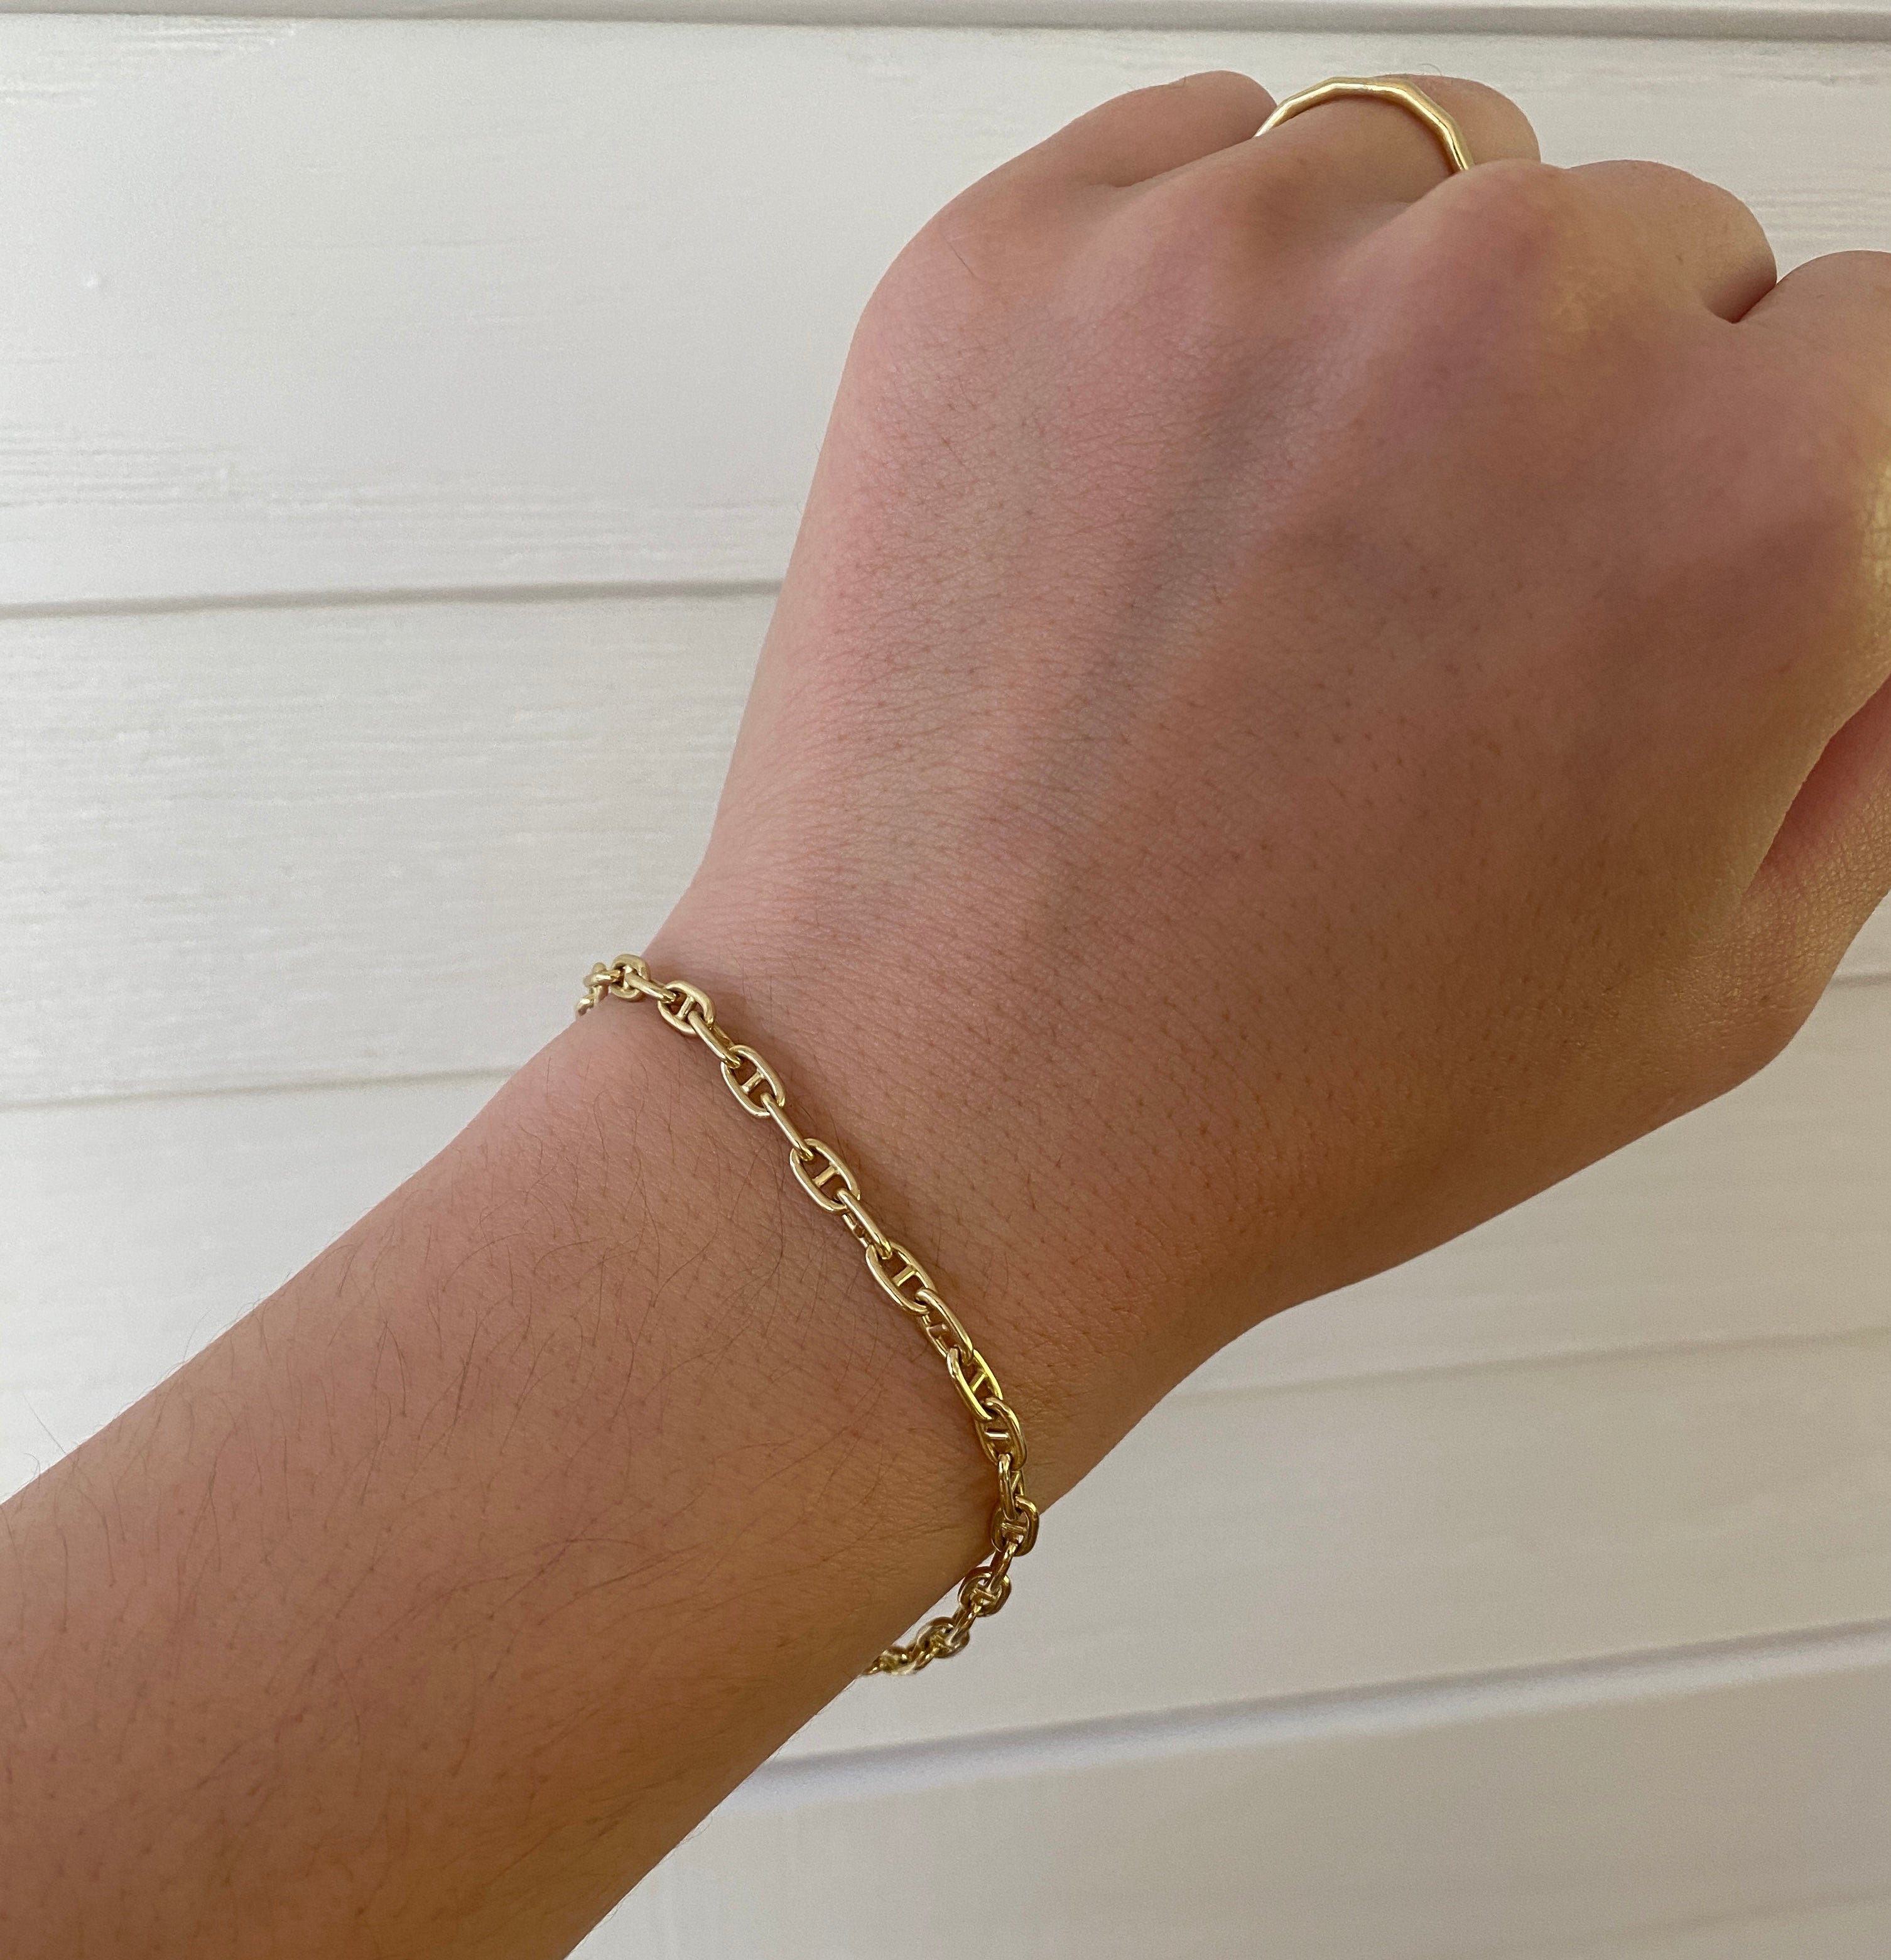 How to Measure Wrist for Bracelet Size | Monica Vinader